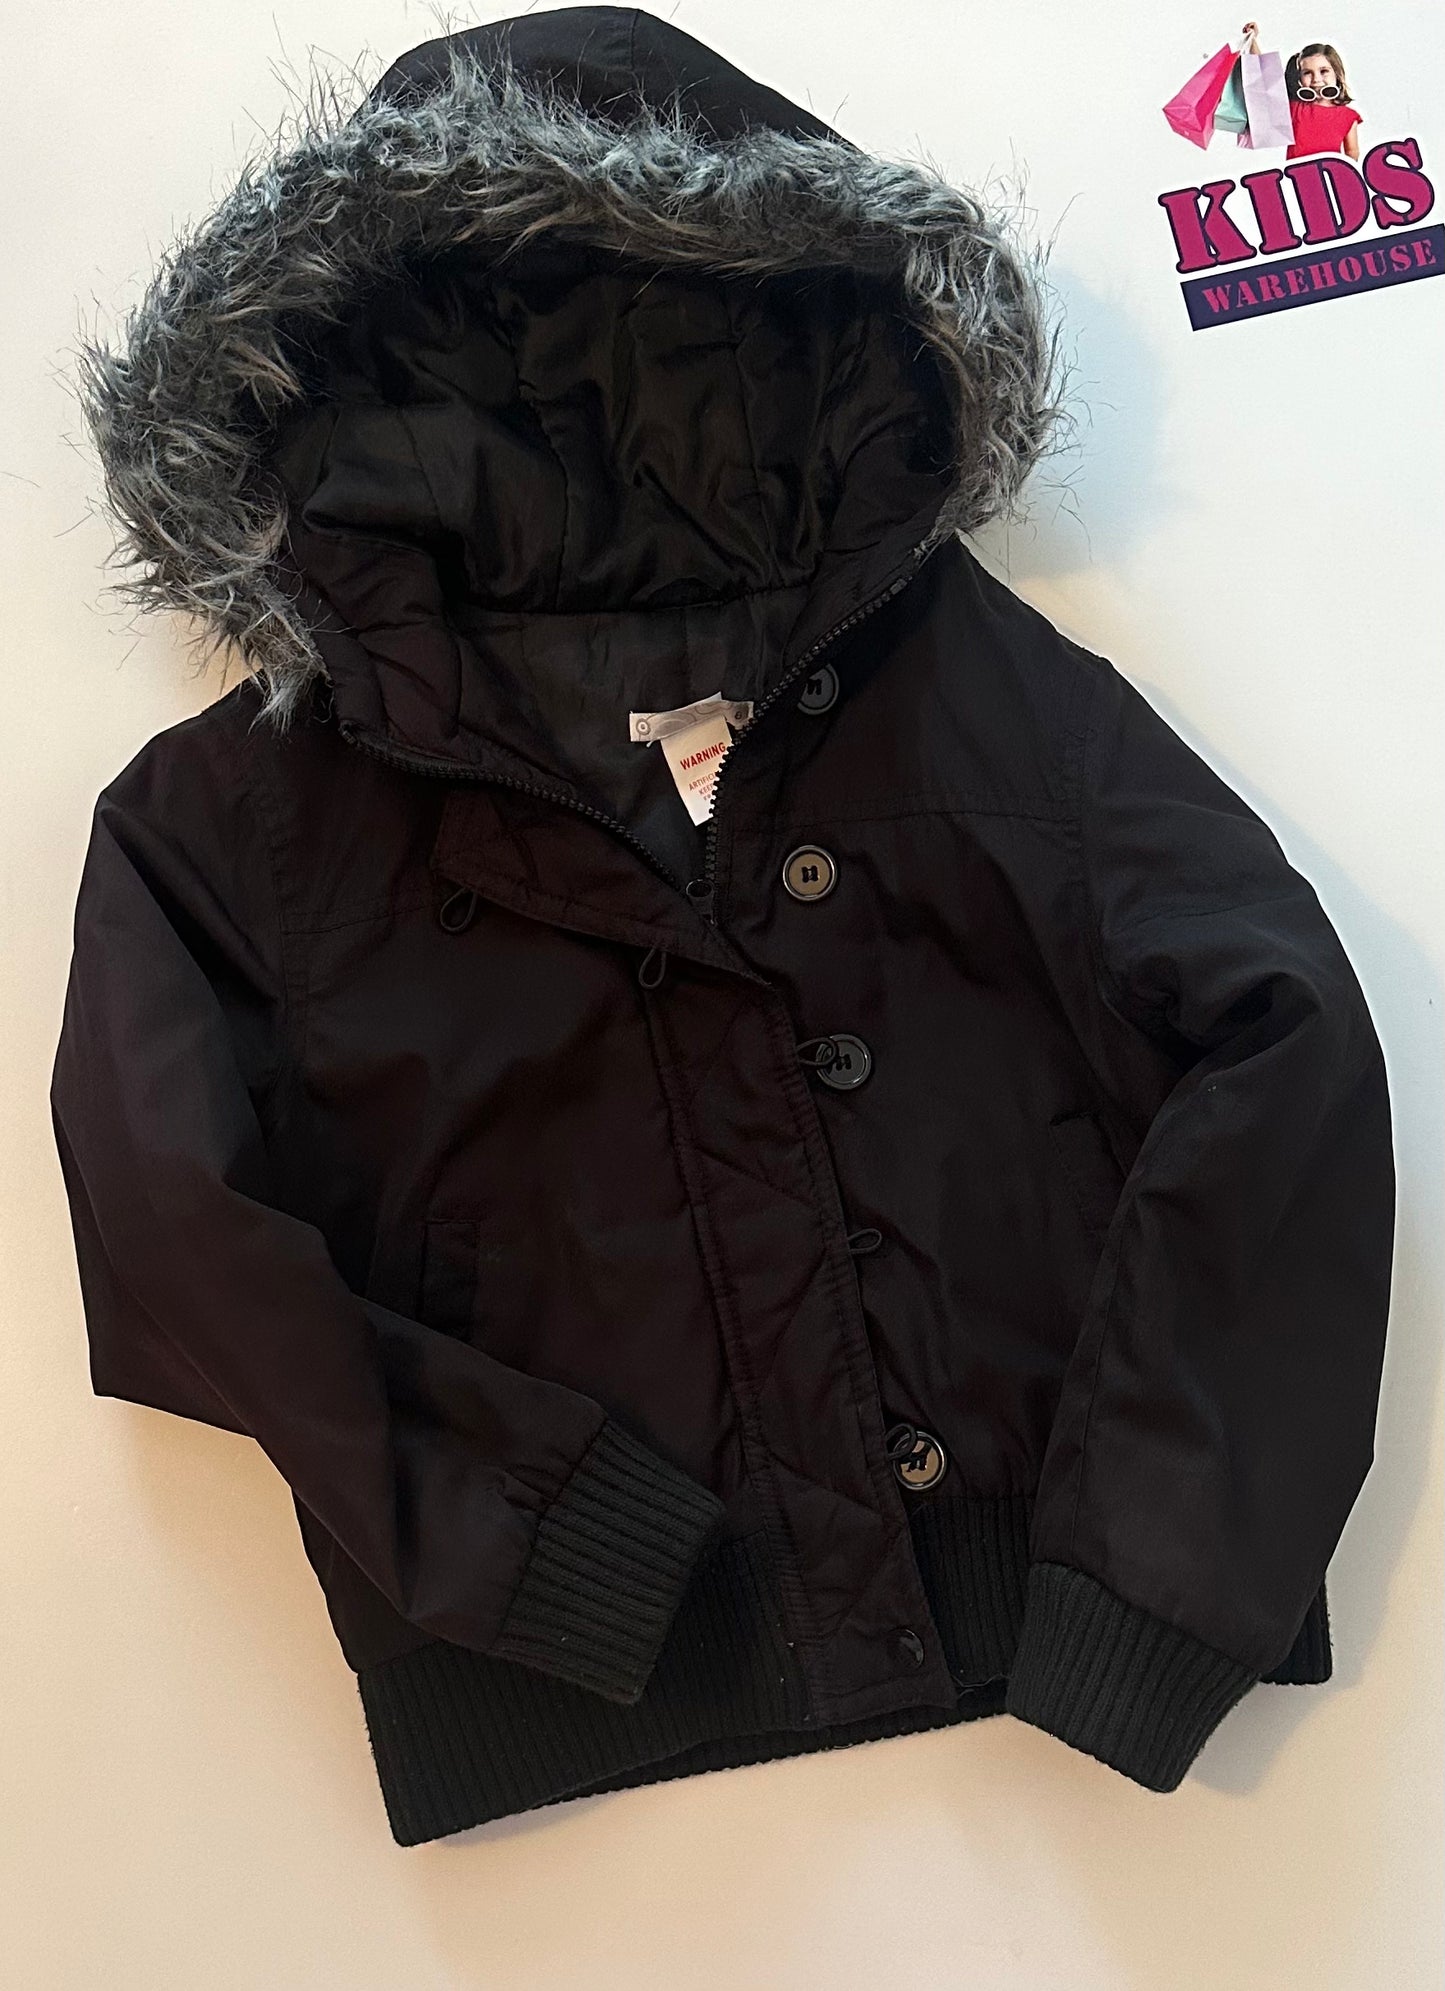 Target Black Jacket with Fur Size 8